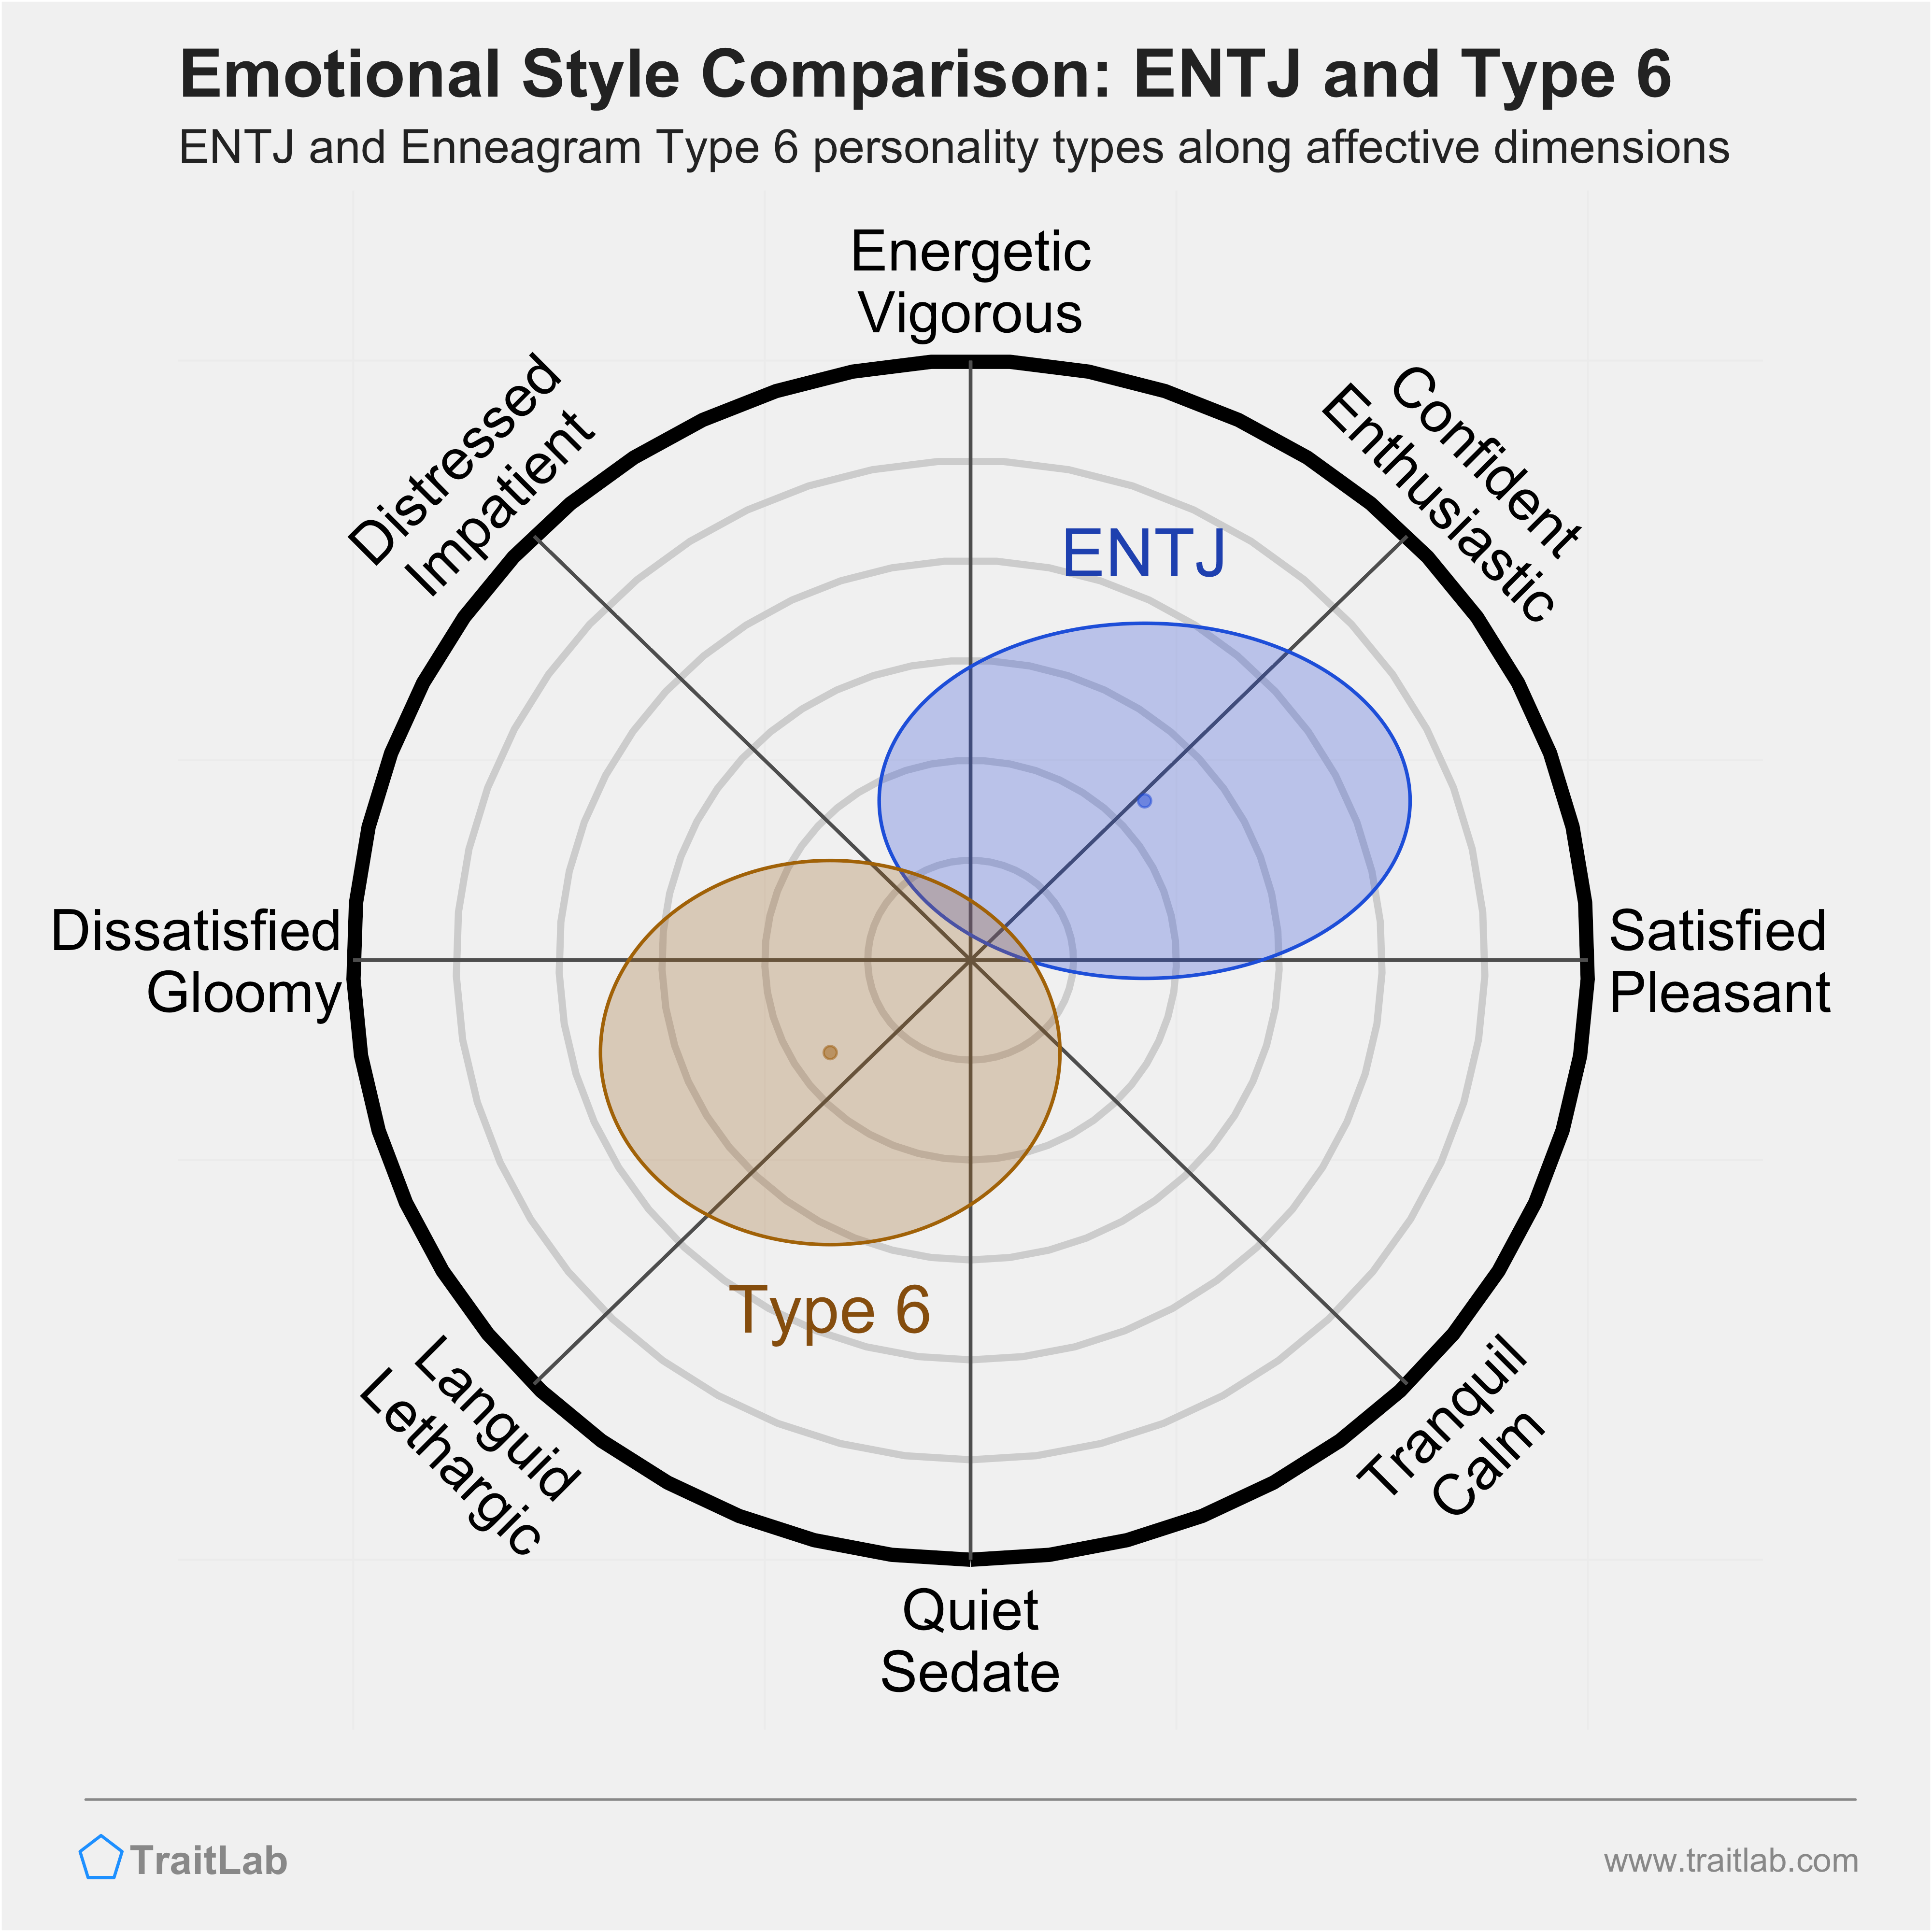 ENTJ and Type 6 comparison across emotional (affective) dimensions